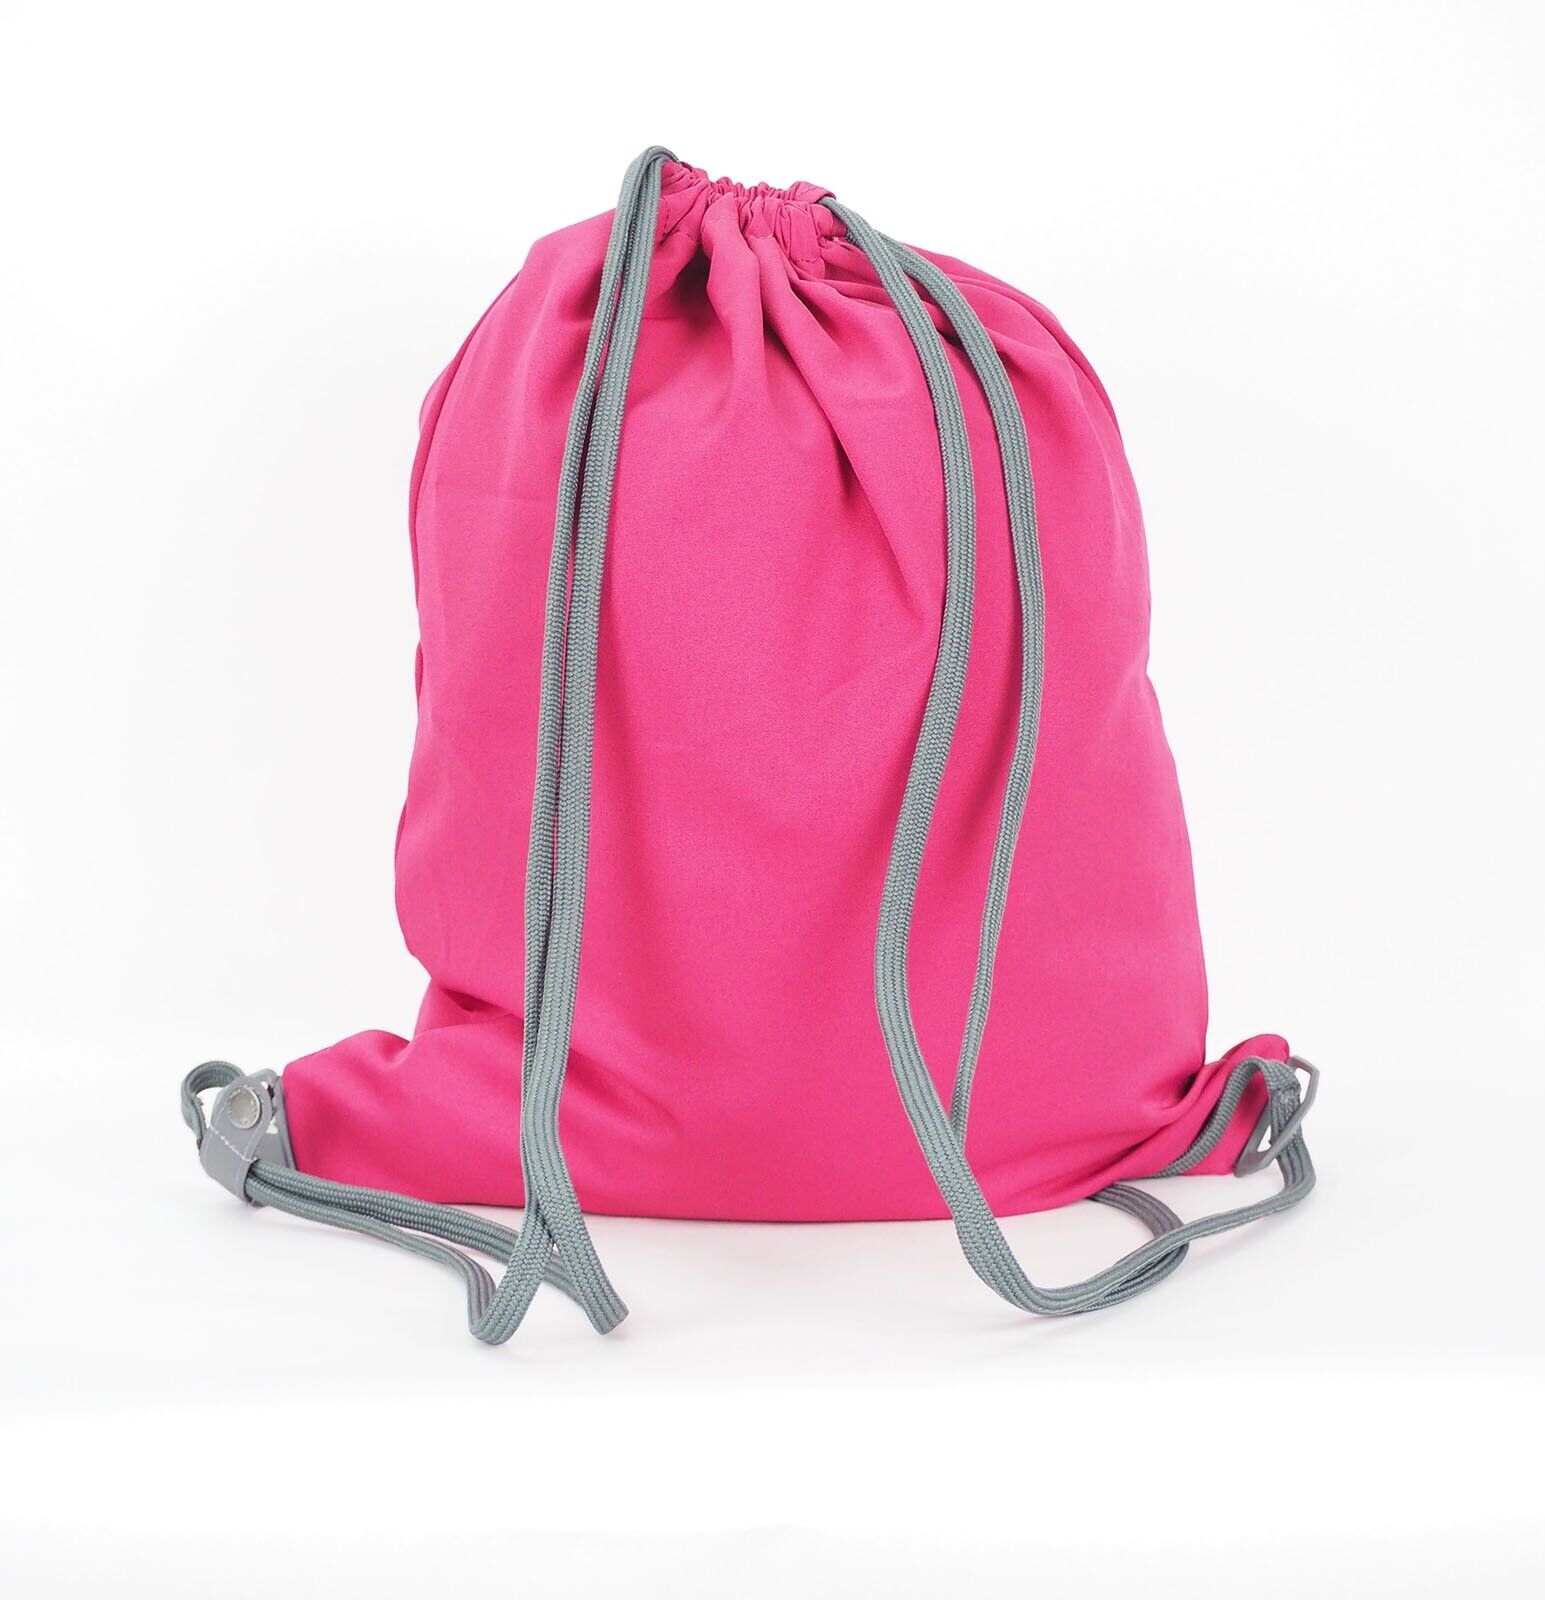 Jack Wolfskin Back Spin 2006532 Azalea Red Medium Bag Casual Everyday Backpack - London Top Style